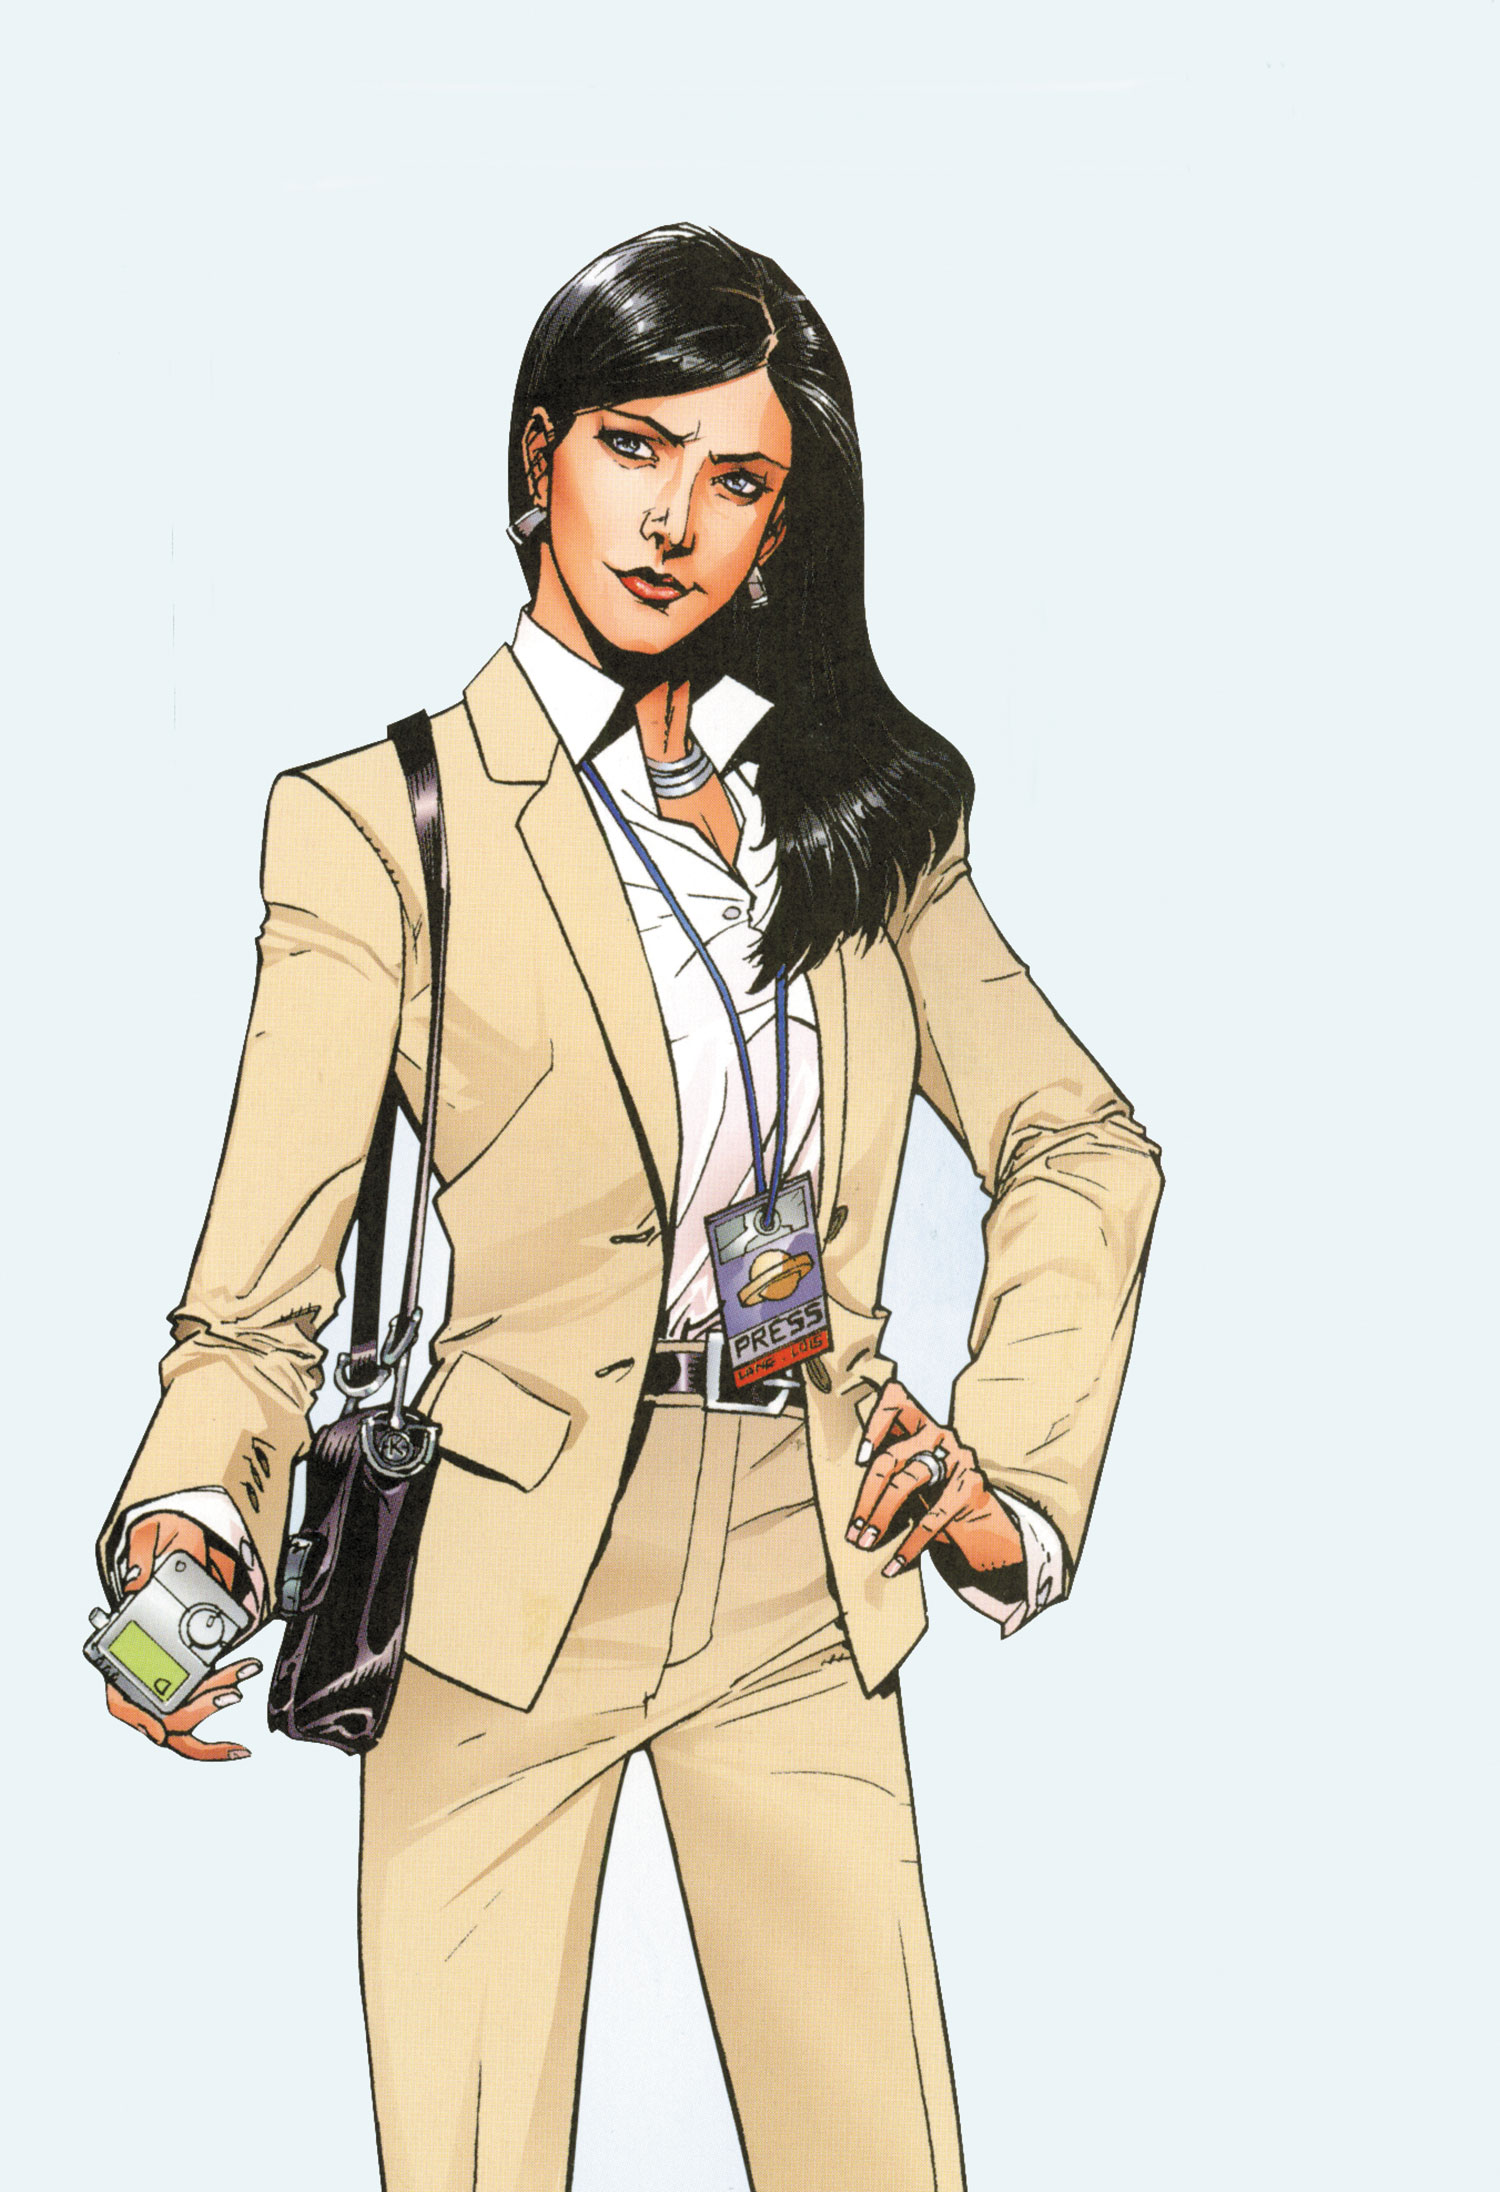 Lois Lane #1